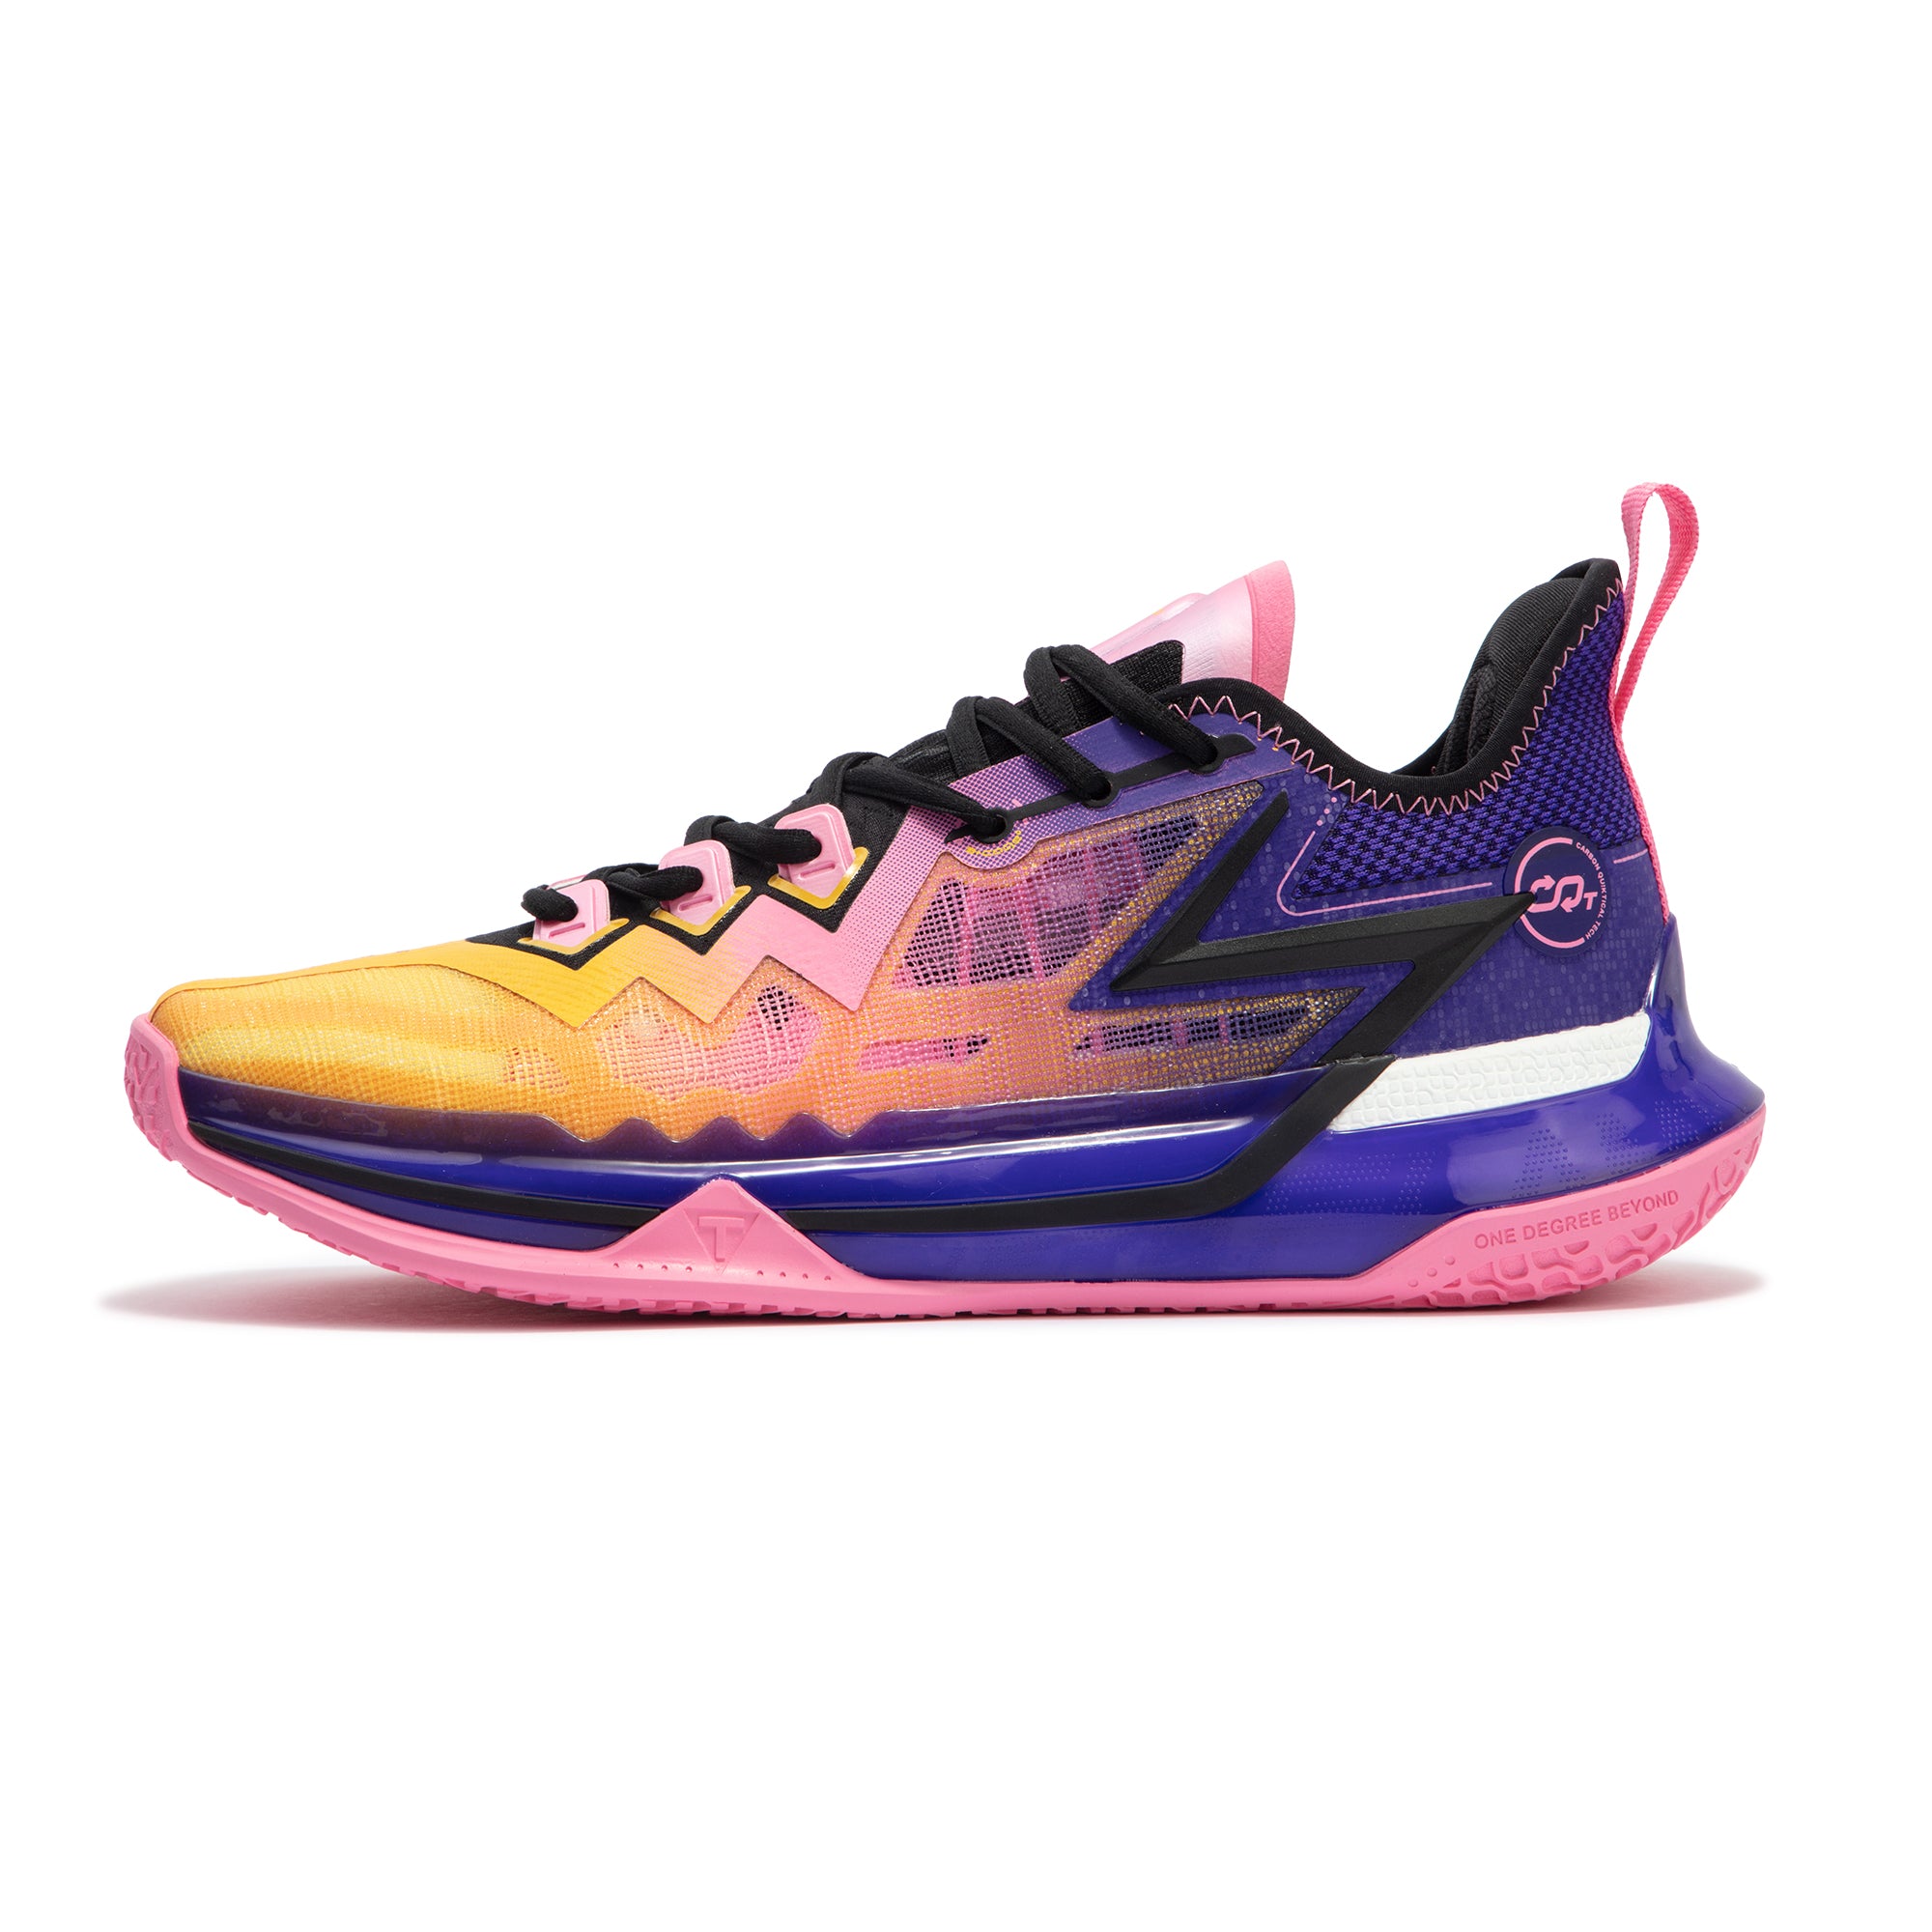 Nikola Jokić NBA Basketball Shoes|BIG3 FUTURE CALIFORNIA SUNSET 